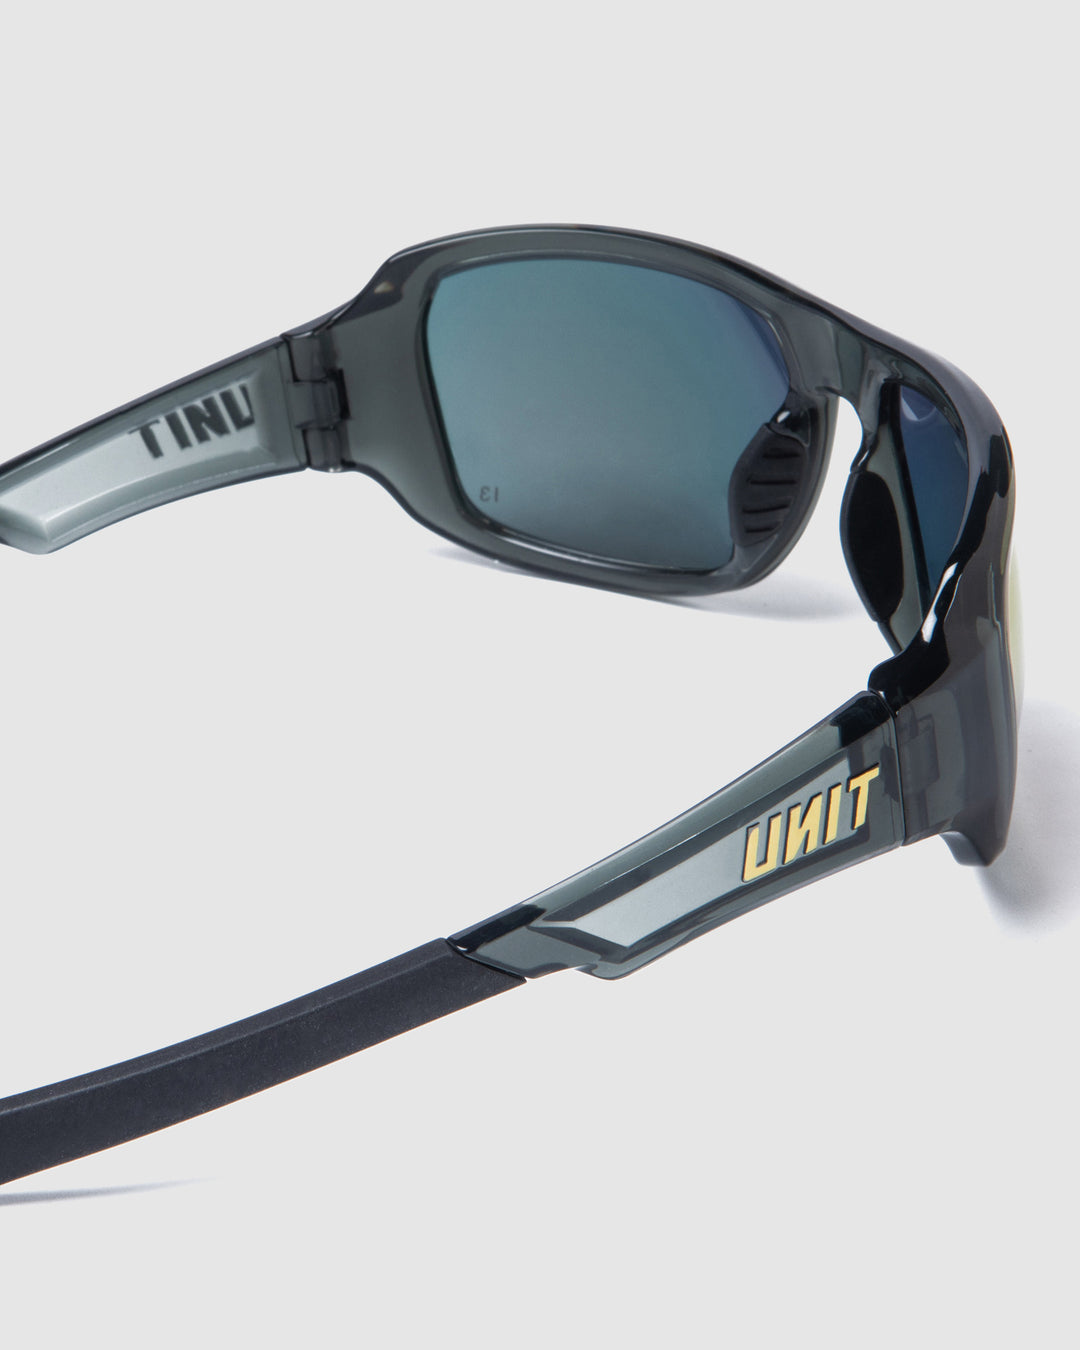 UNIT Storm - Medium Impact Safety Sunglasses - Crystal Smoke